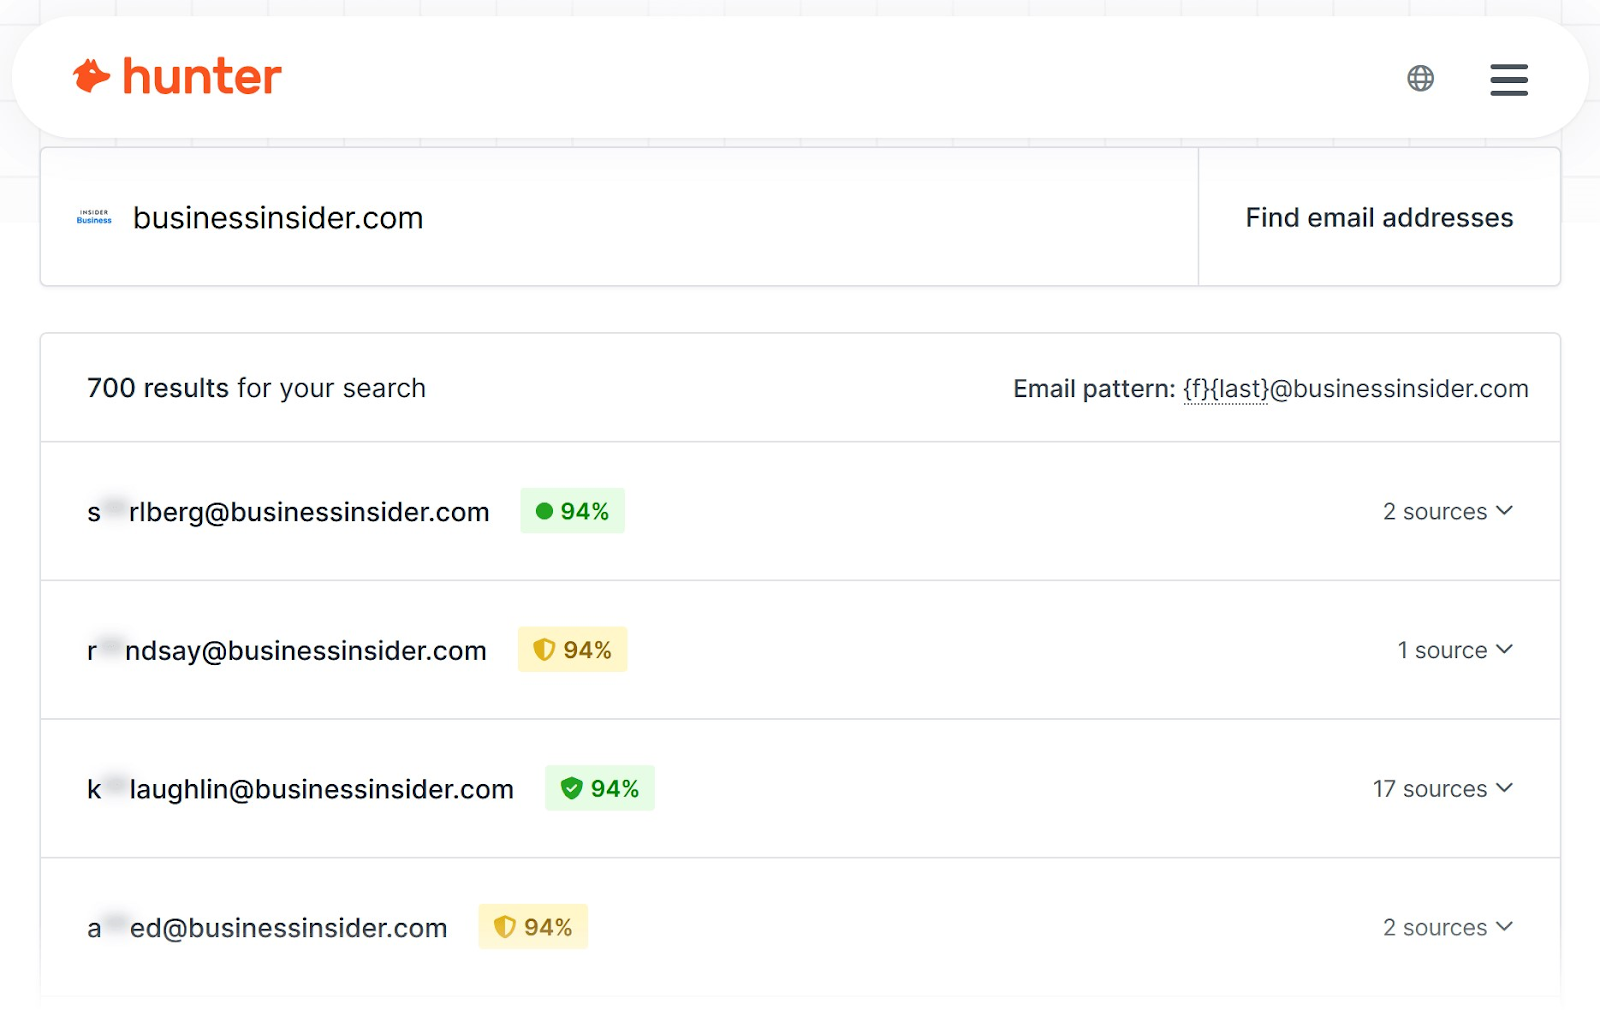 results for "businessinsider.com" search in Hunter.io.